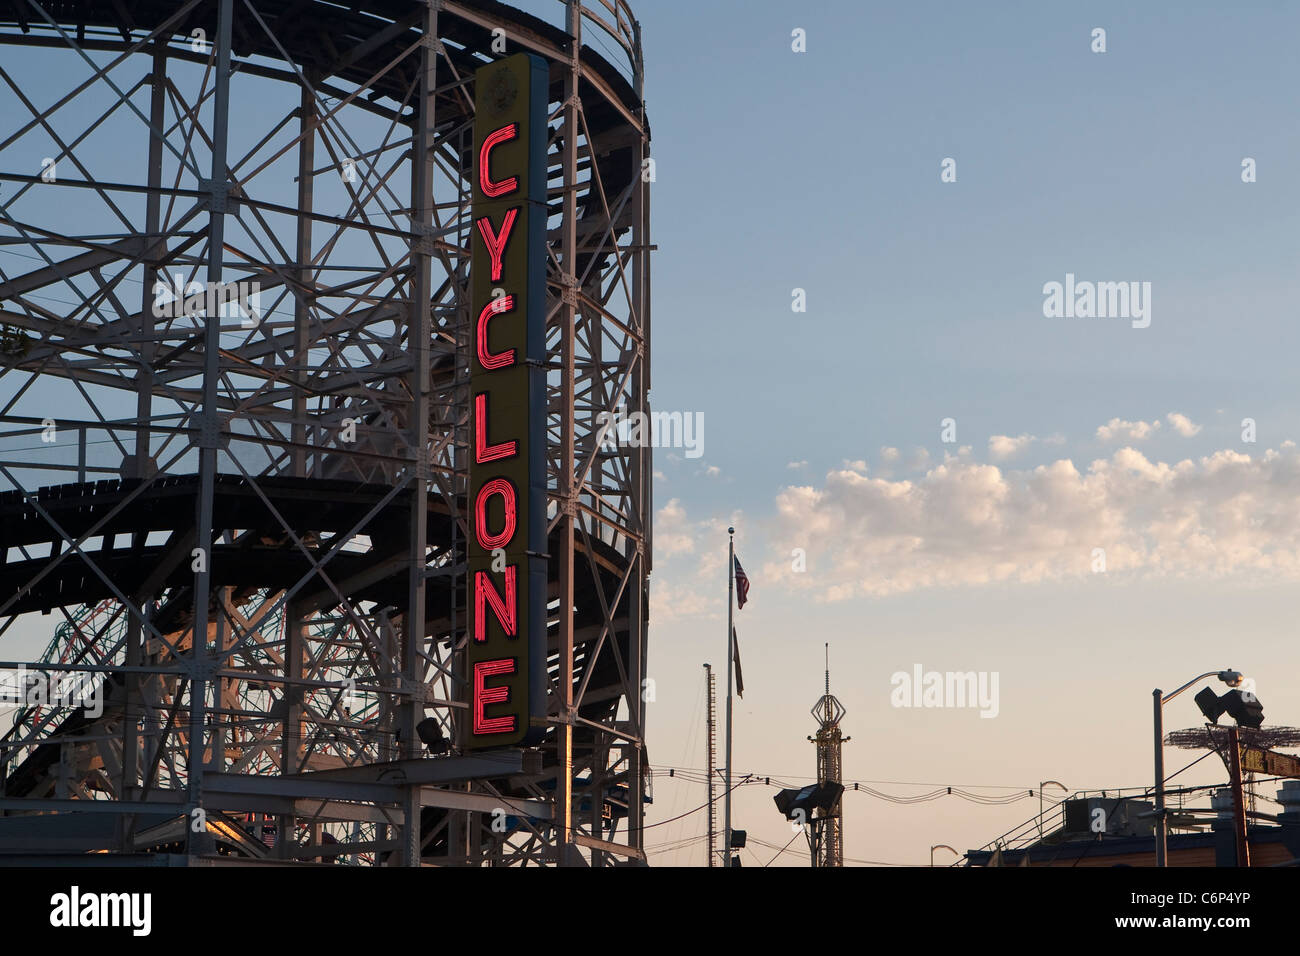 Den Sonnenuntergang auf Coney Island Cyclone Roller Coster auf Coney Island im New Yorker Stadtbezirk Brooklyn Stockfoto